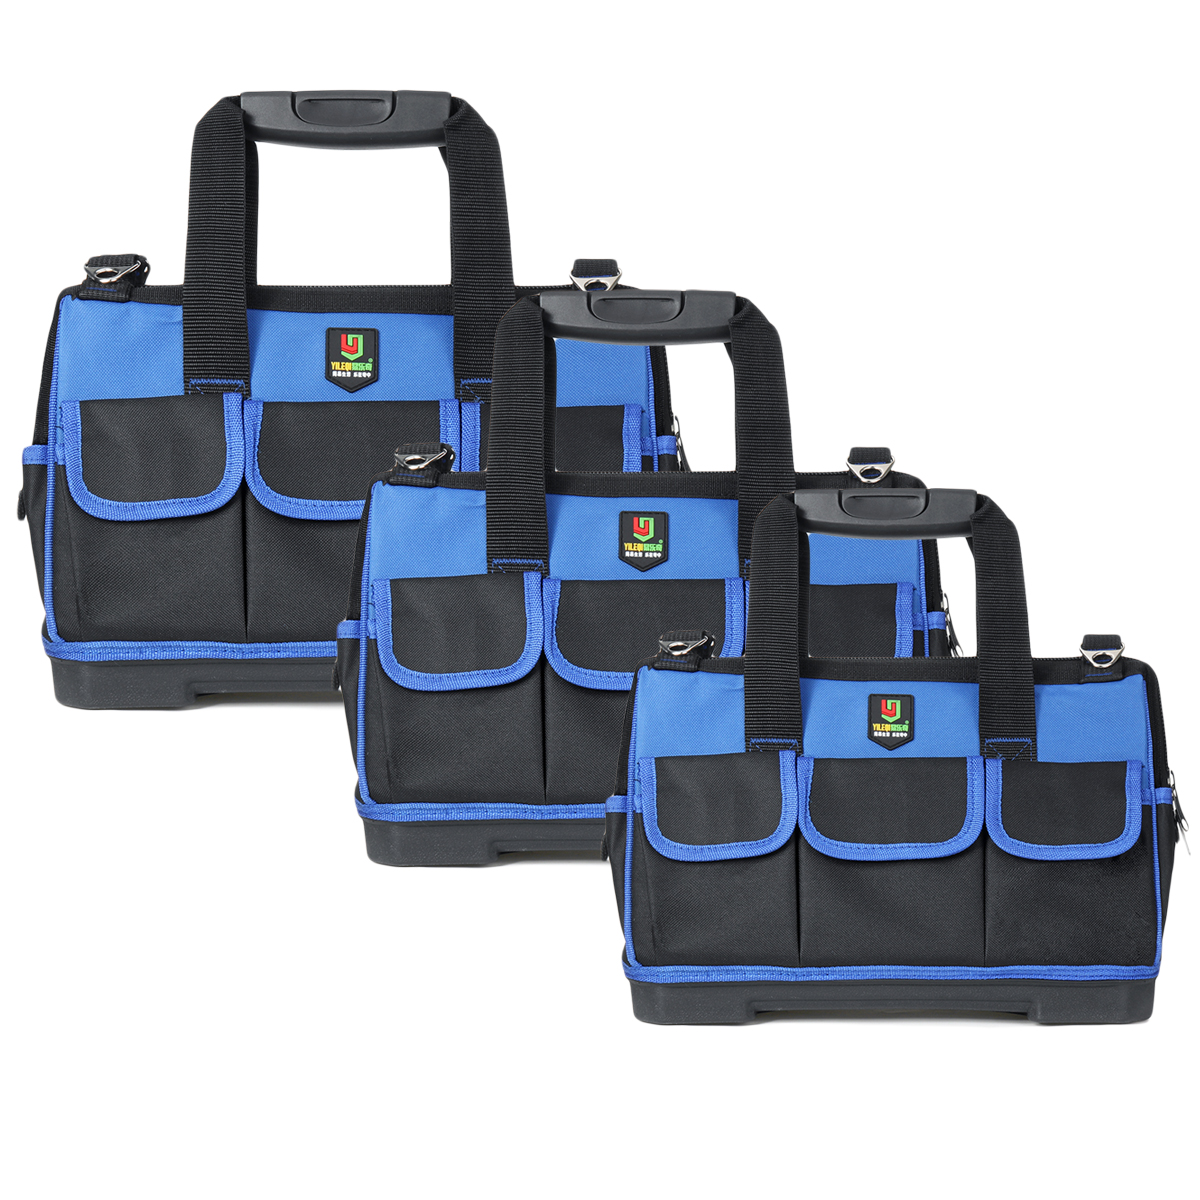 Multi-Function-Tool-Bag-Heavy-Duty-Storage-Organizer-Oxford-Fabric-Carrier-Bag-1699983-2